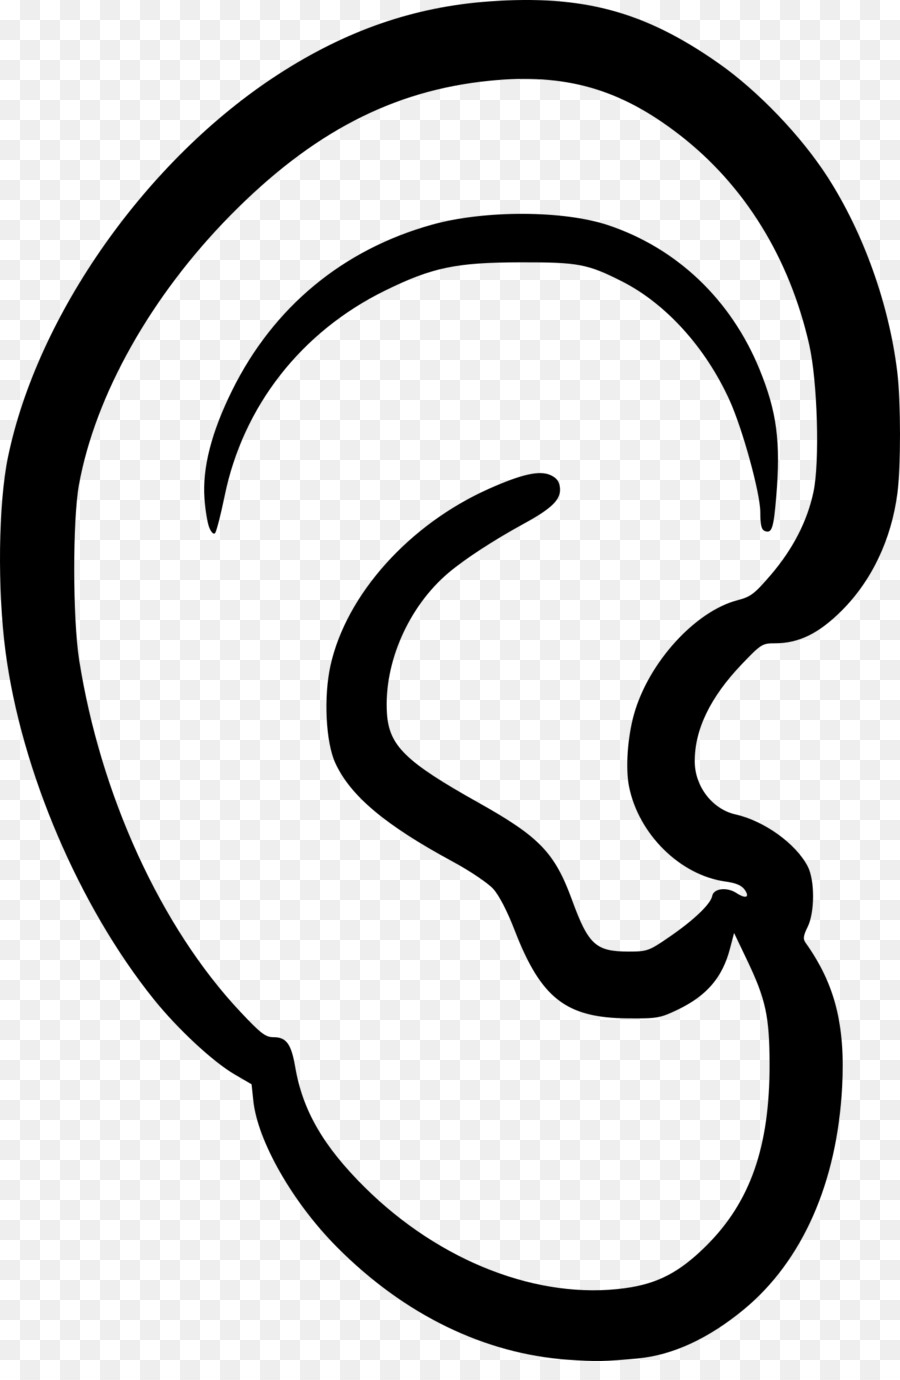 Ear Anatomy Clip art - golden ear png download - 1587*2400 - Free Transparent Ear png Download.